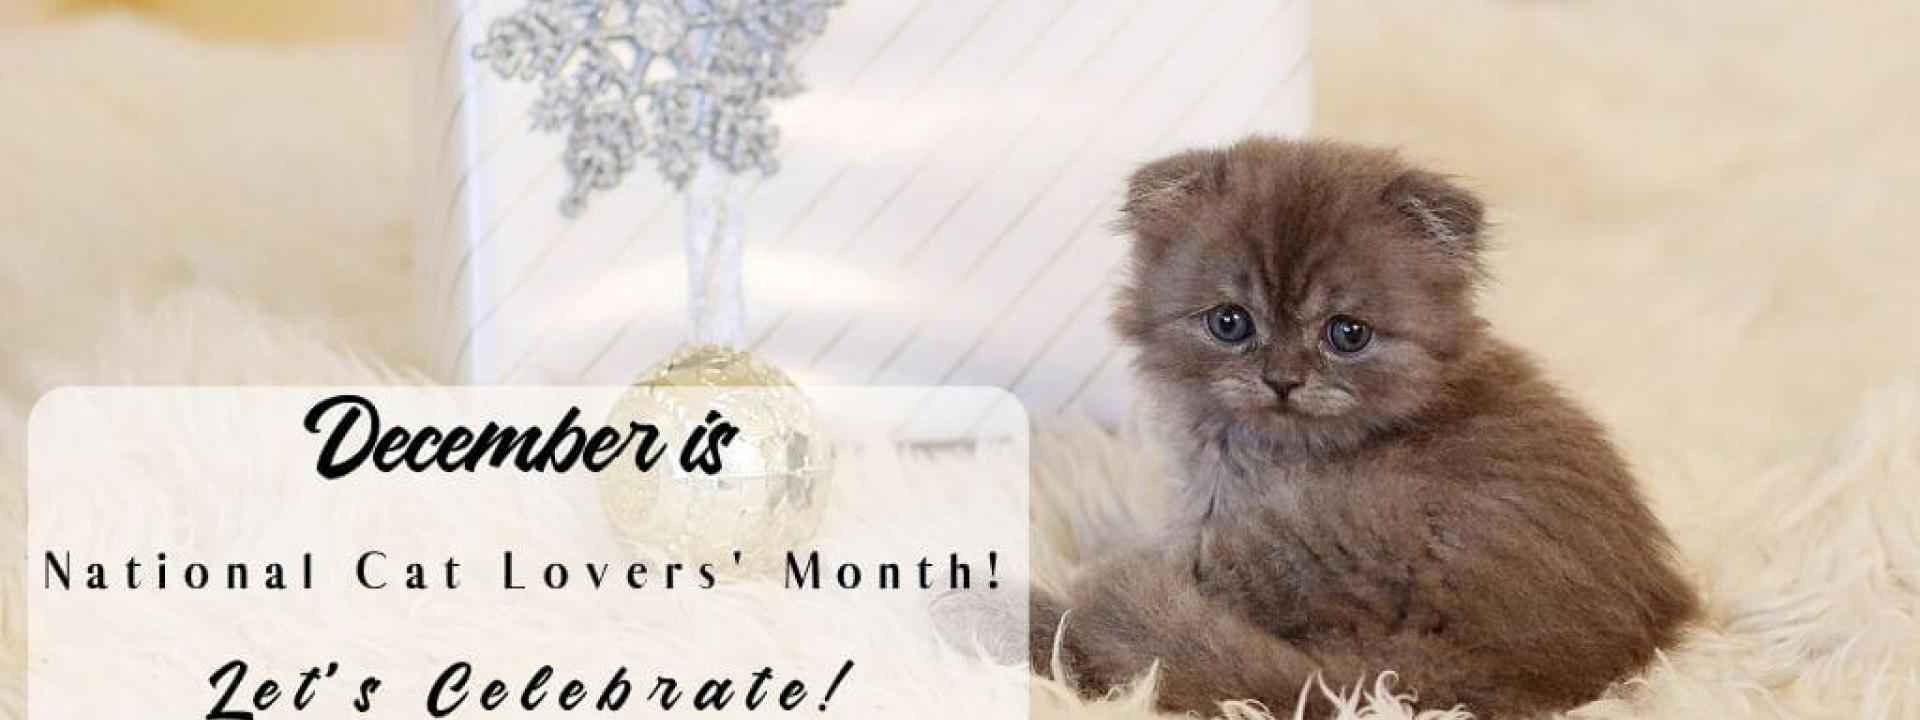 cat-lovers-month-blog-header.jpg